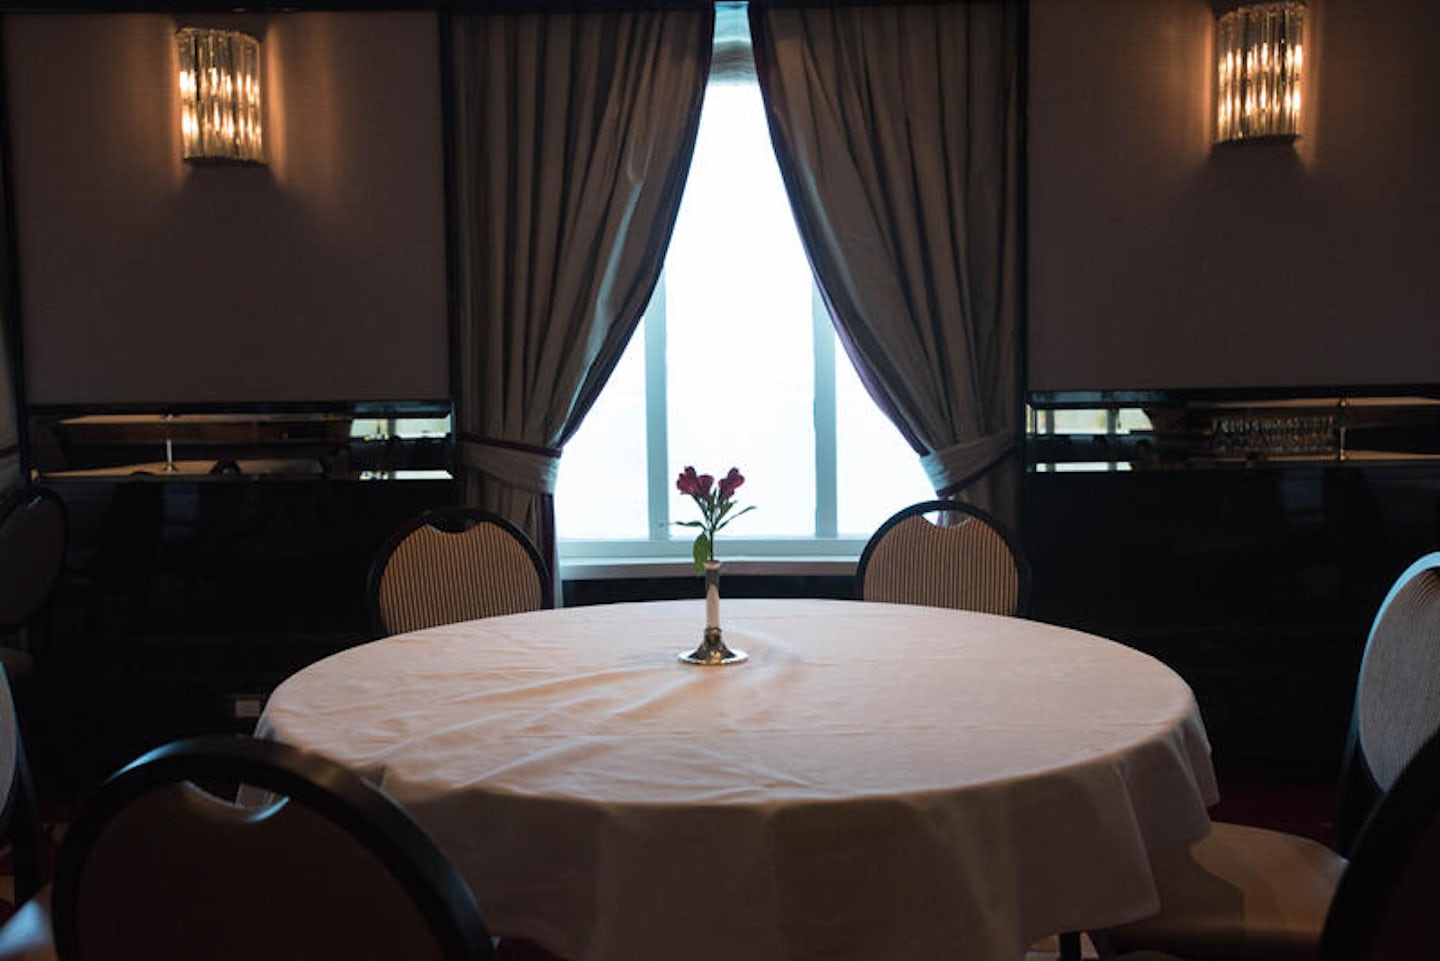 Allegro Dining Room on Regal Princess